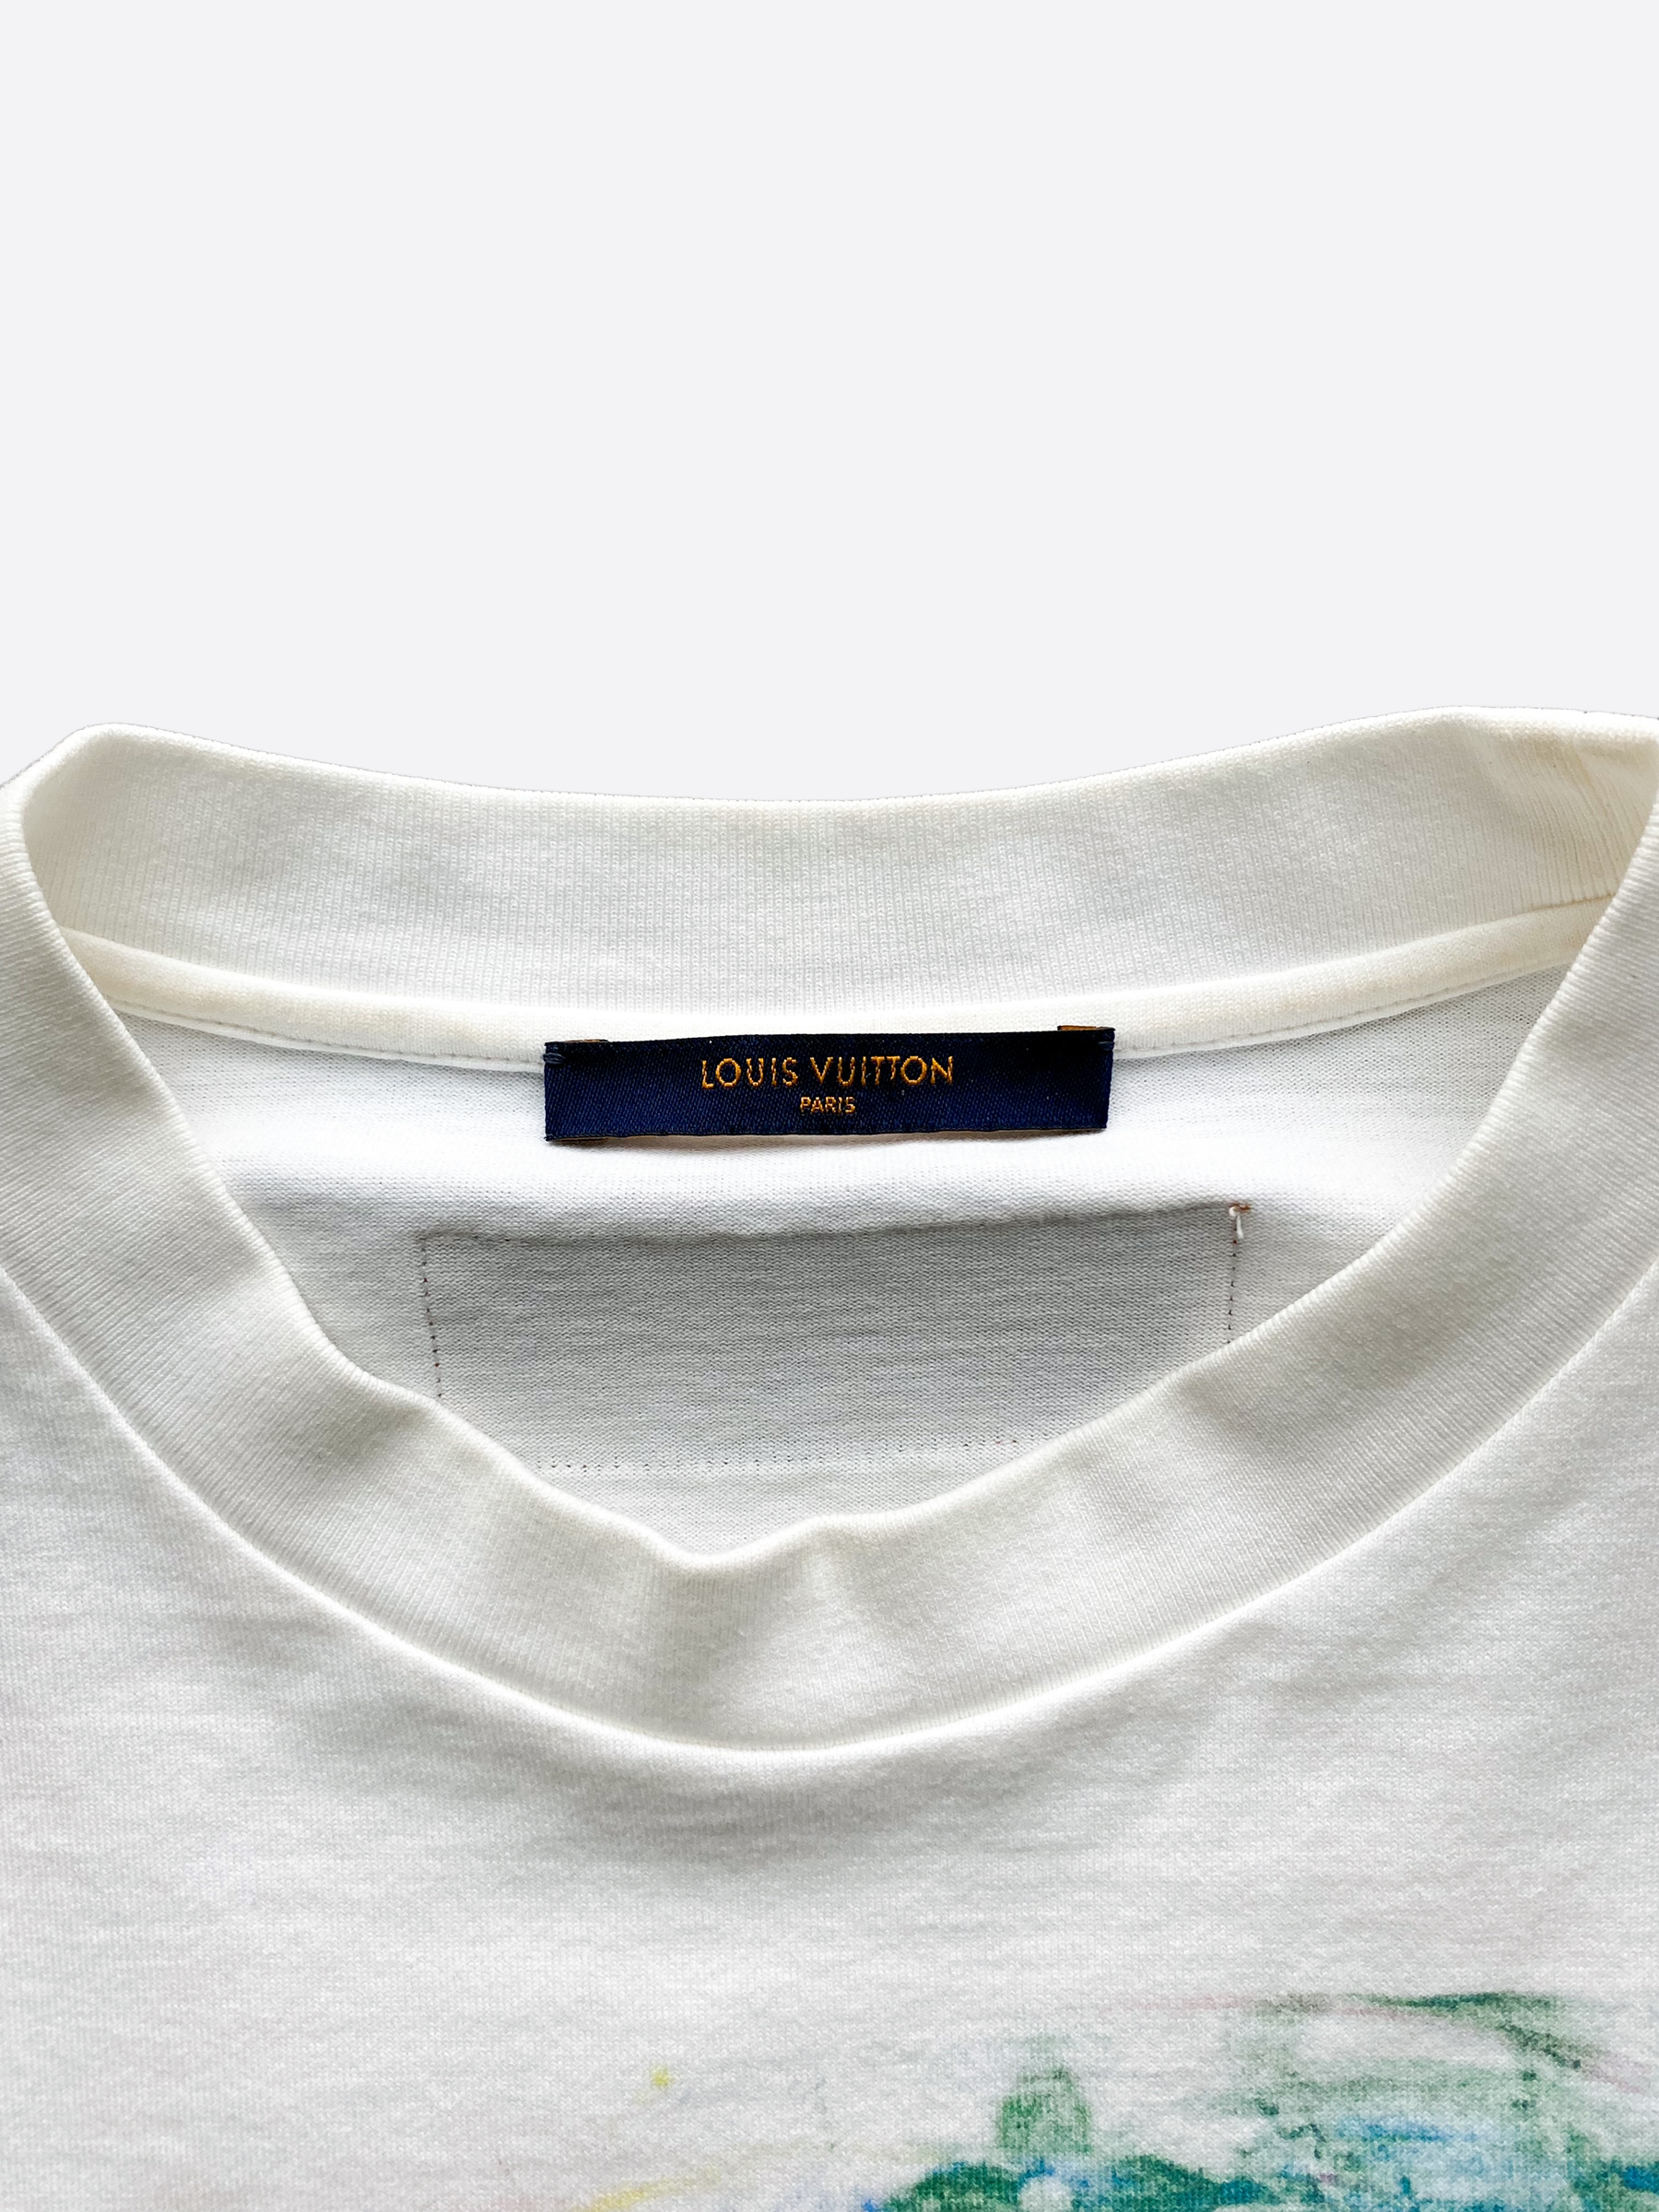 Personalized Louis Vuitton Logo Print American Flag Shirt - Tagotee